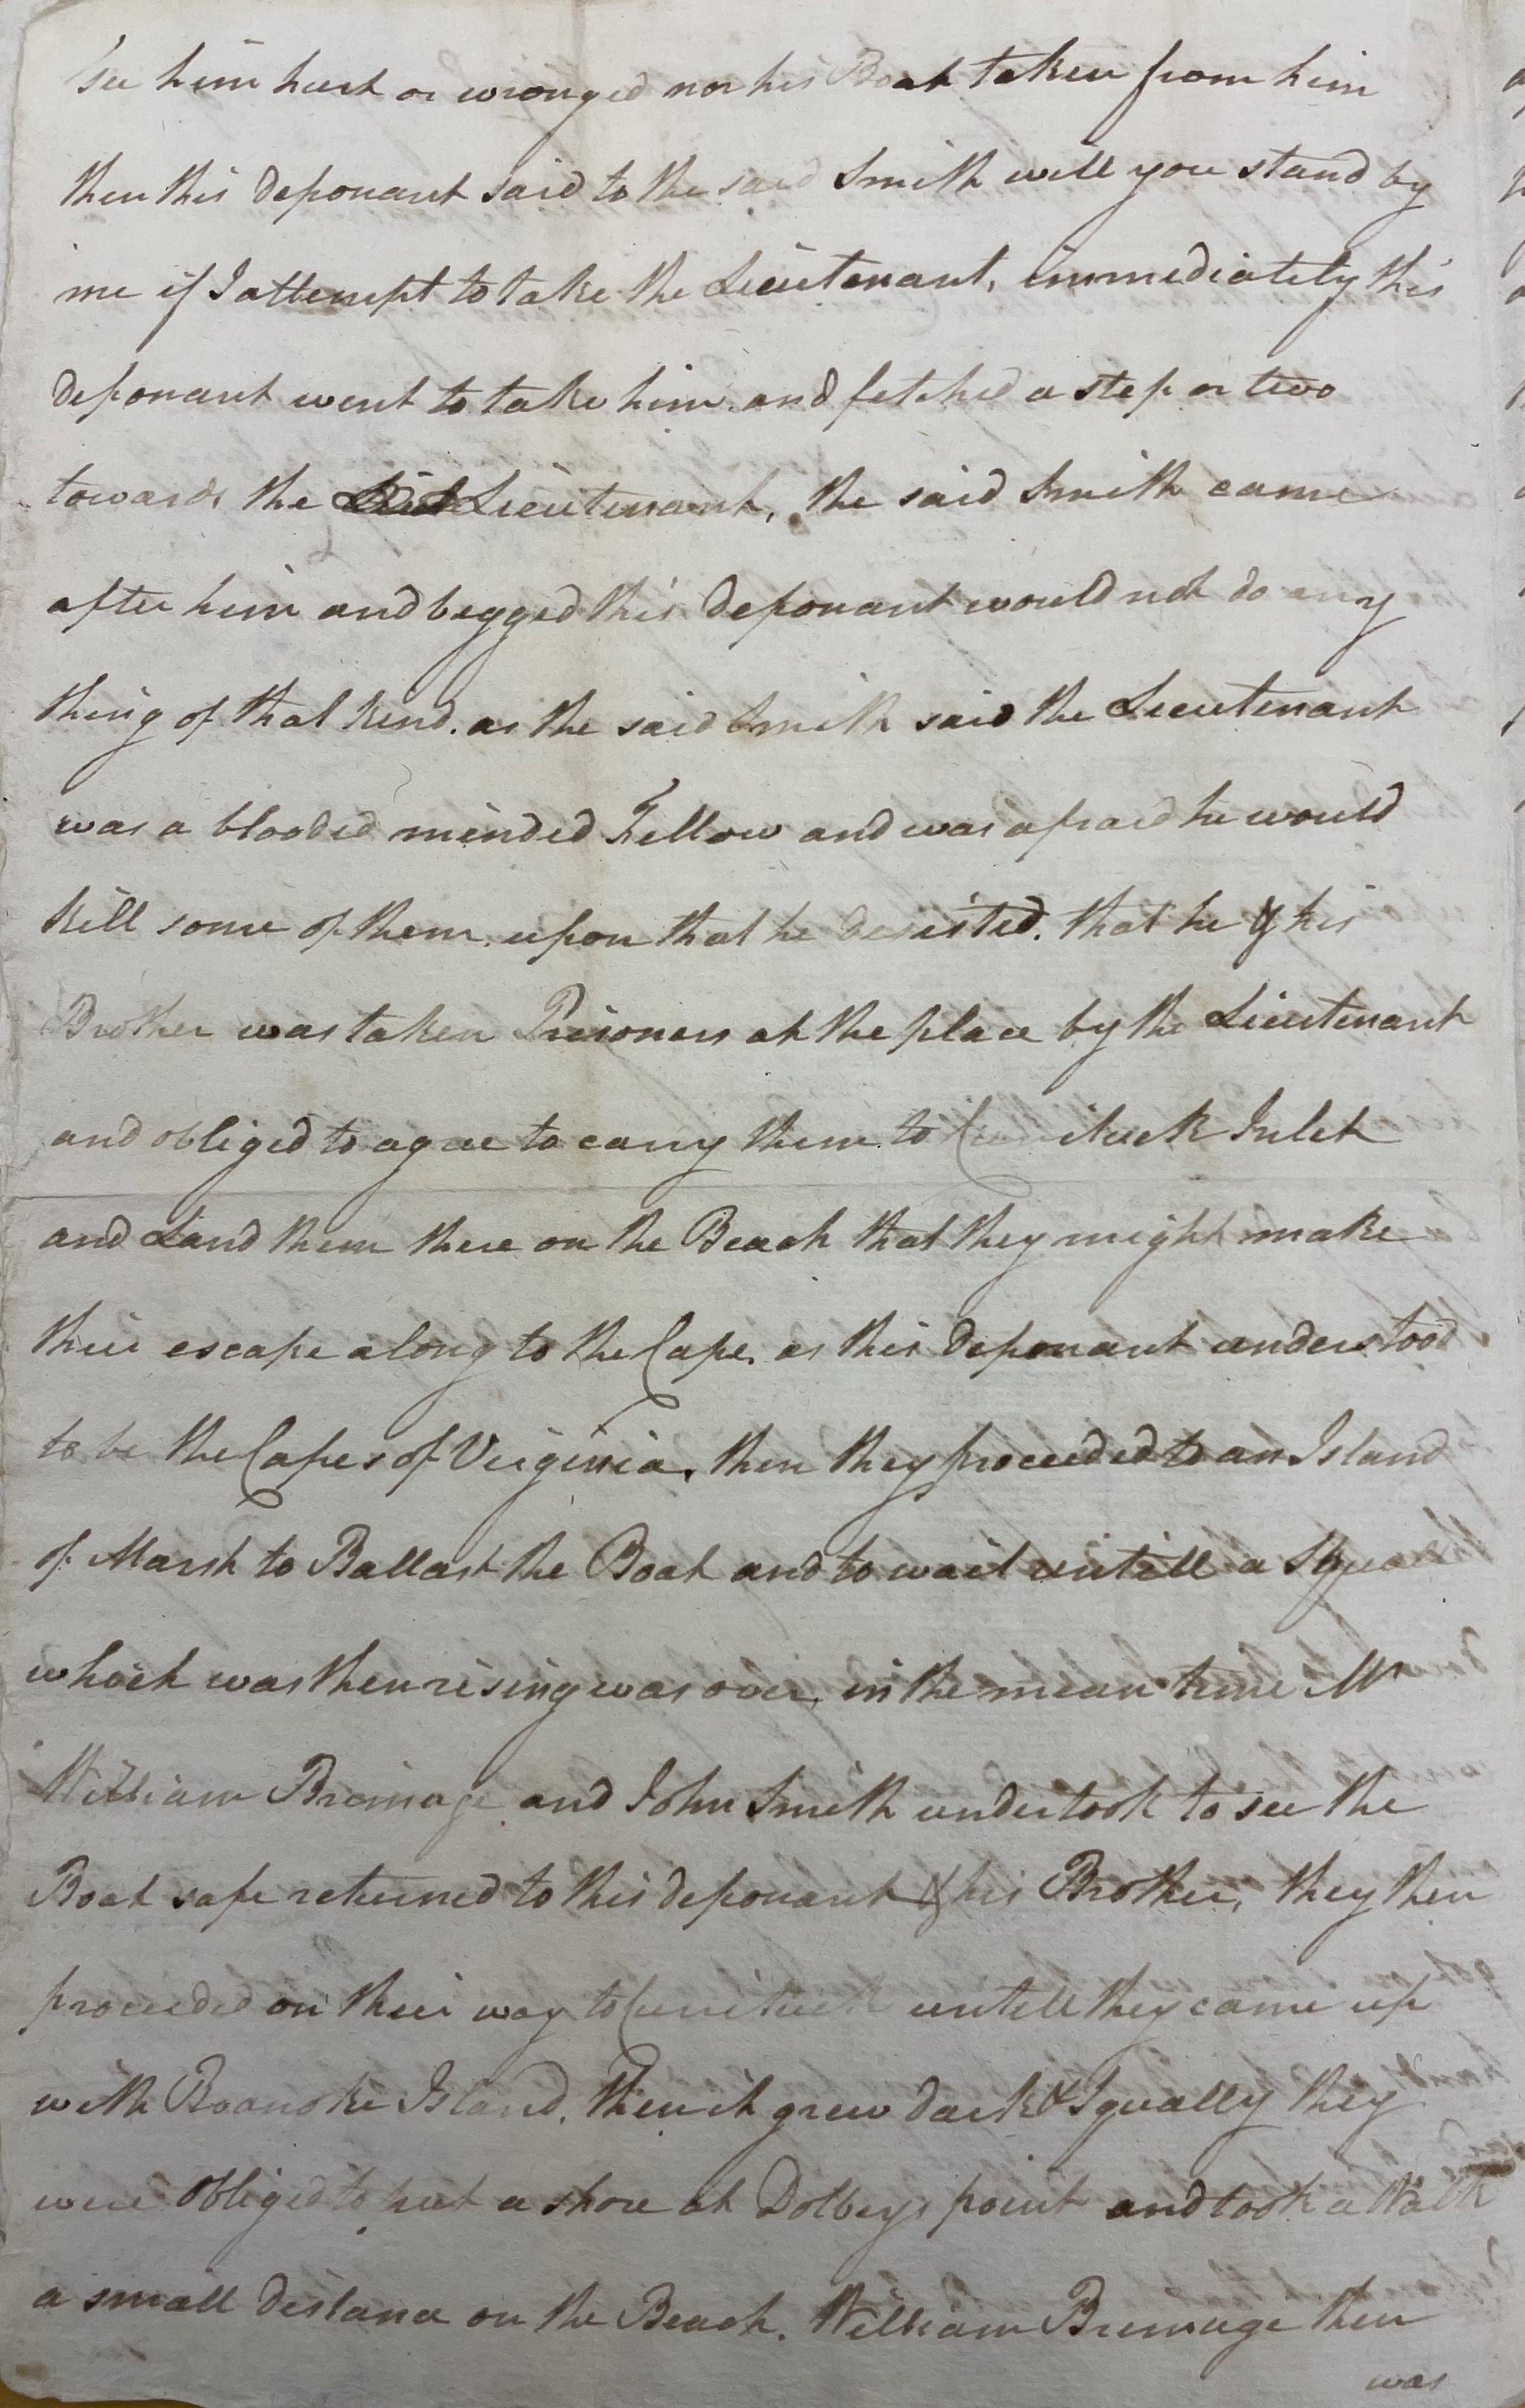 Deposition of Cornelius Austin, 30 July 1777 page 2